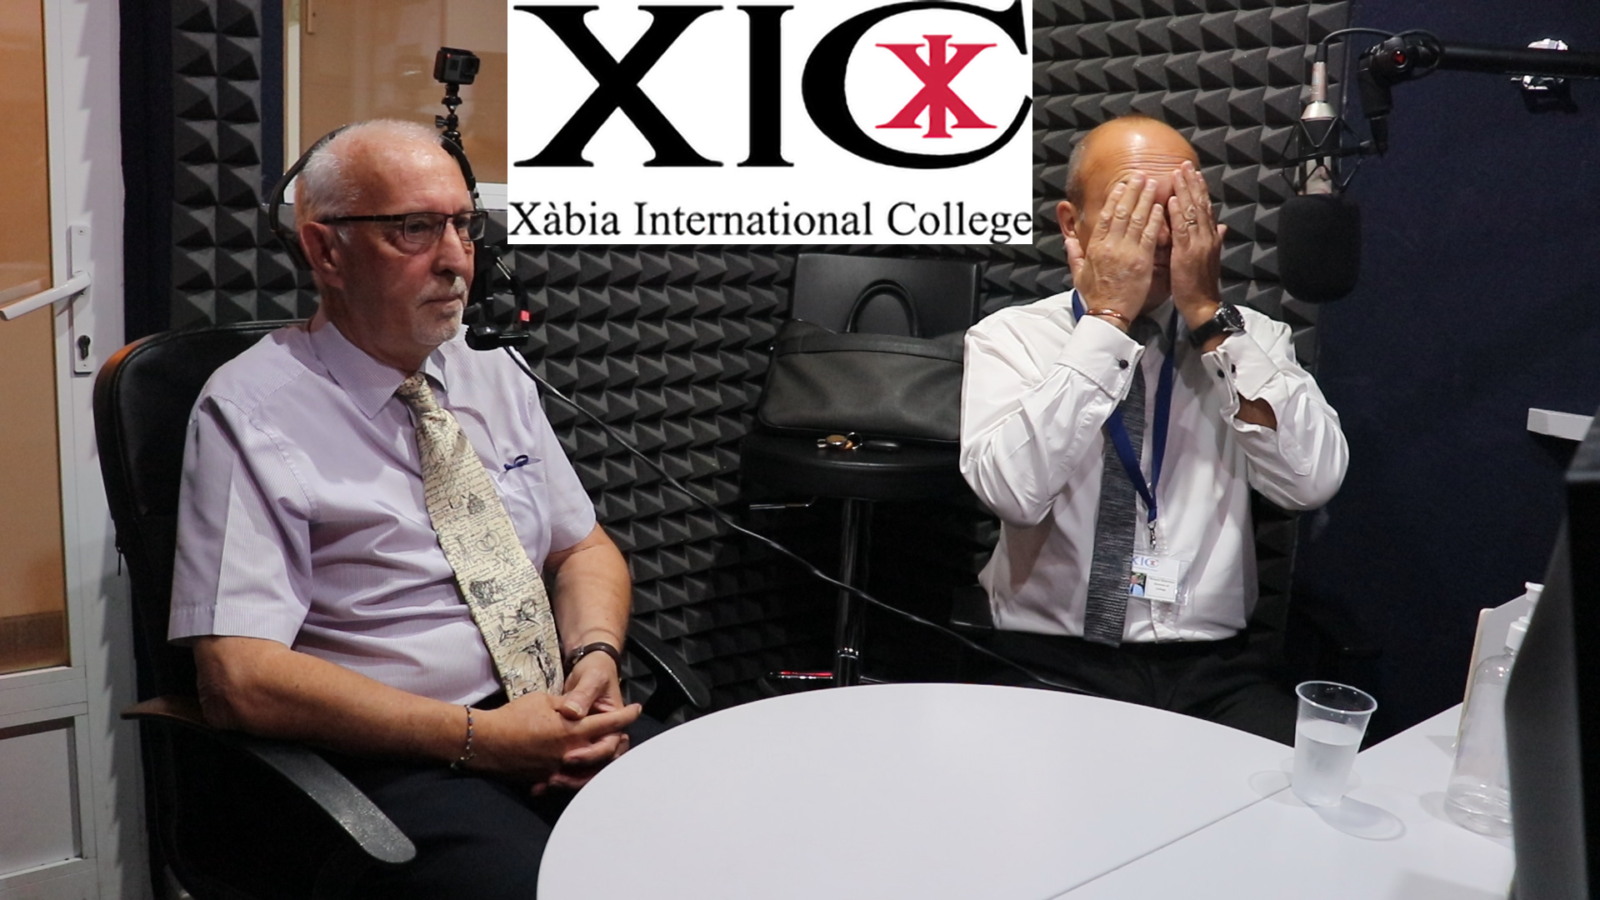 Xabia International College XIC